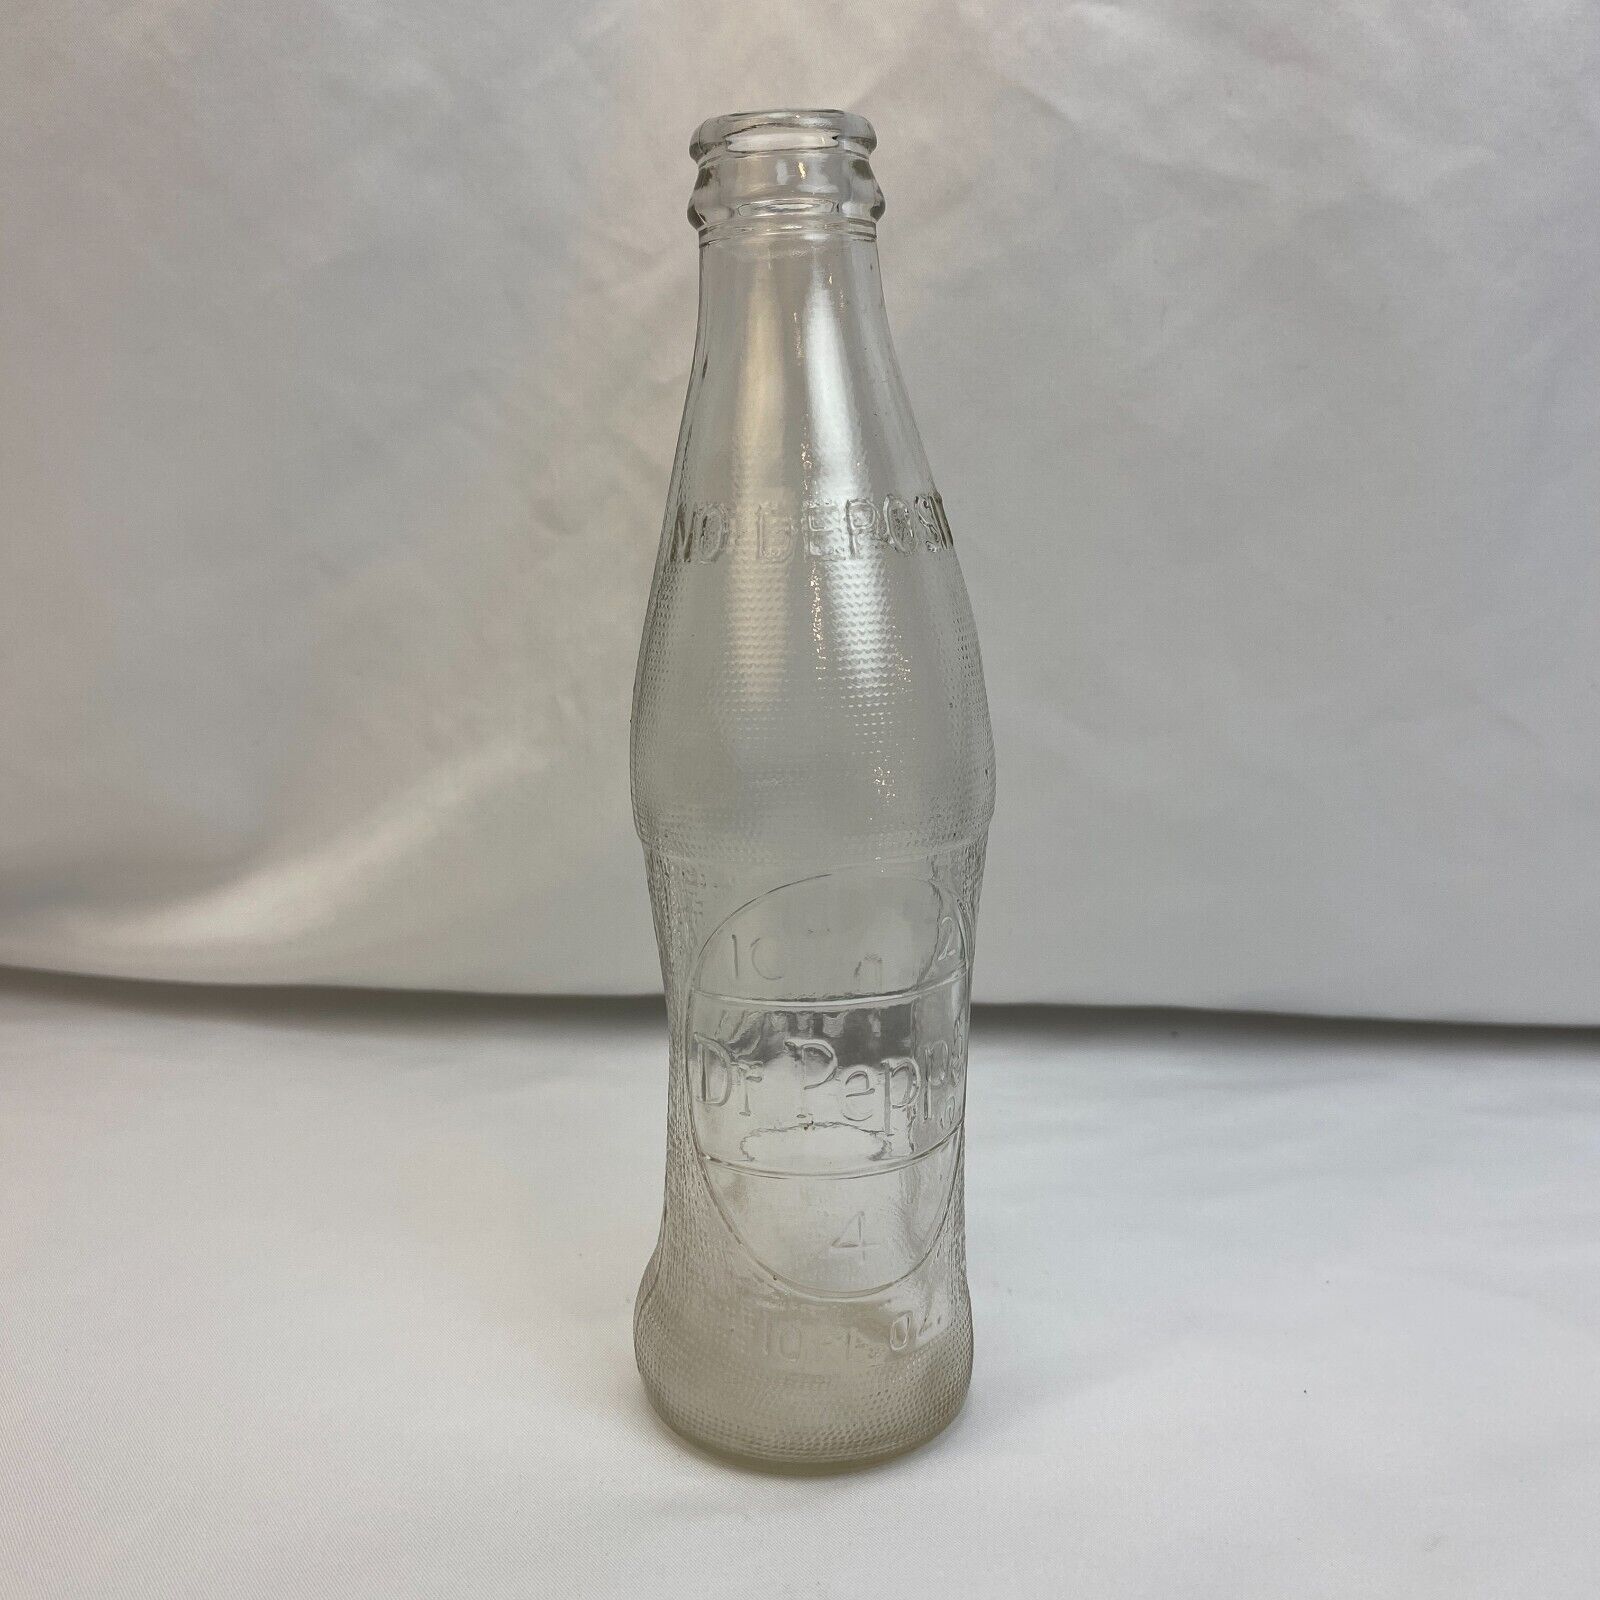 RARE Deformed Vintage Dr. Pepper 10oz Embossed Clear Glass Bottle - Very Unique